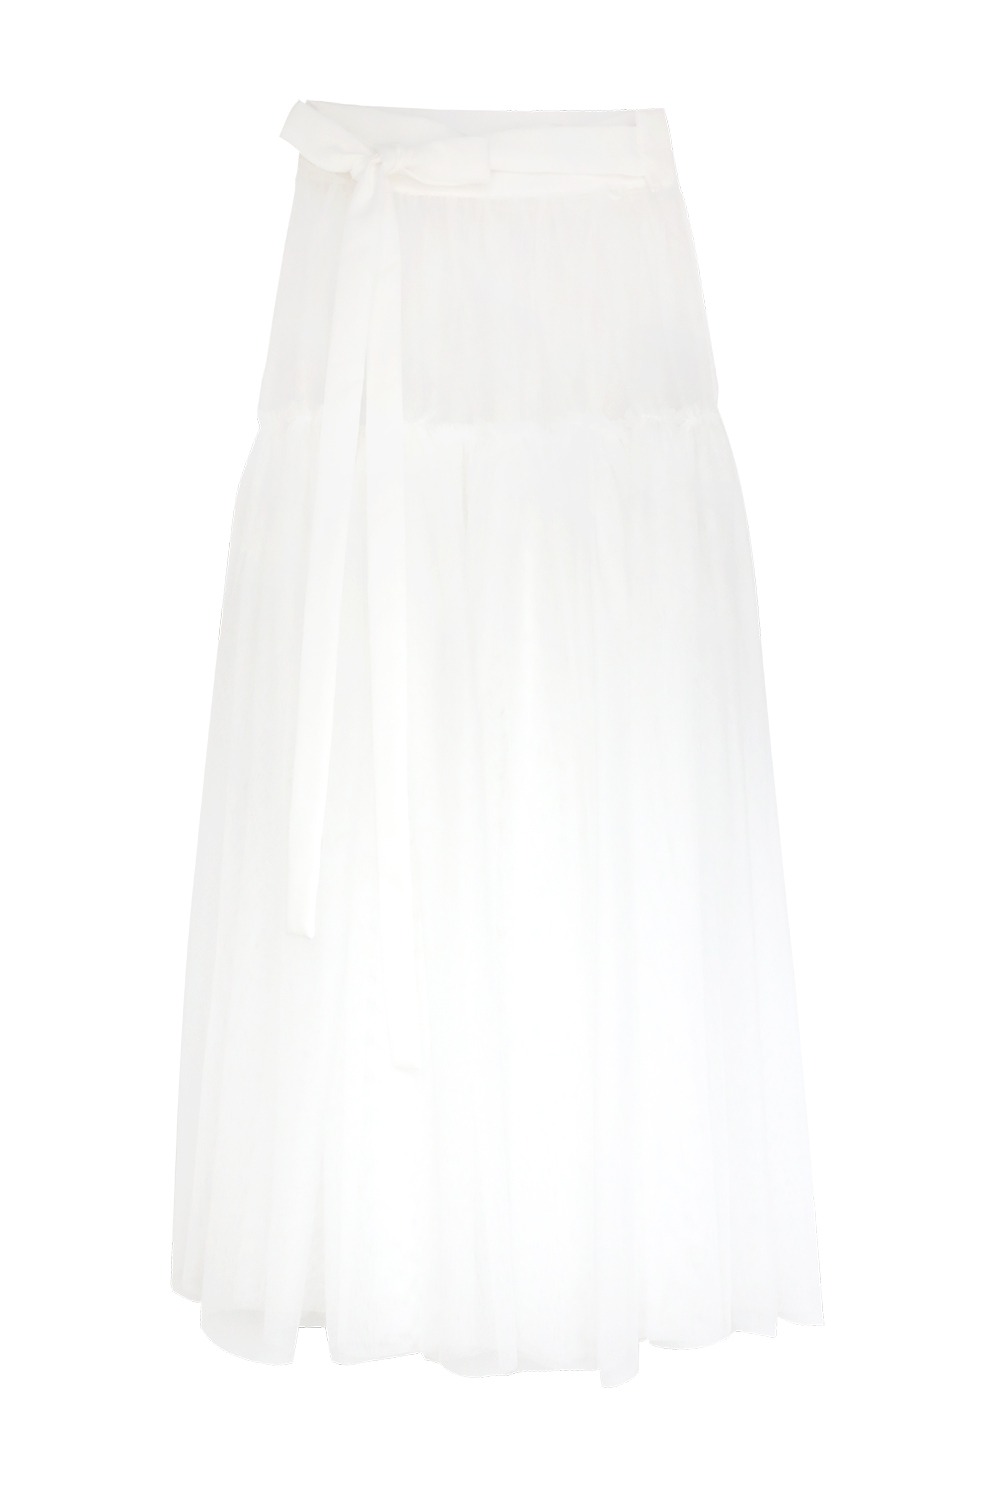 See-through Tiered Sha Waist Skirt [White]